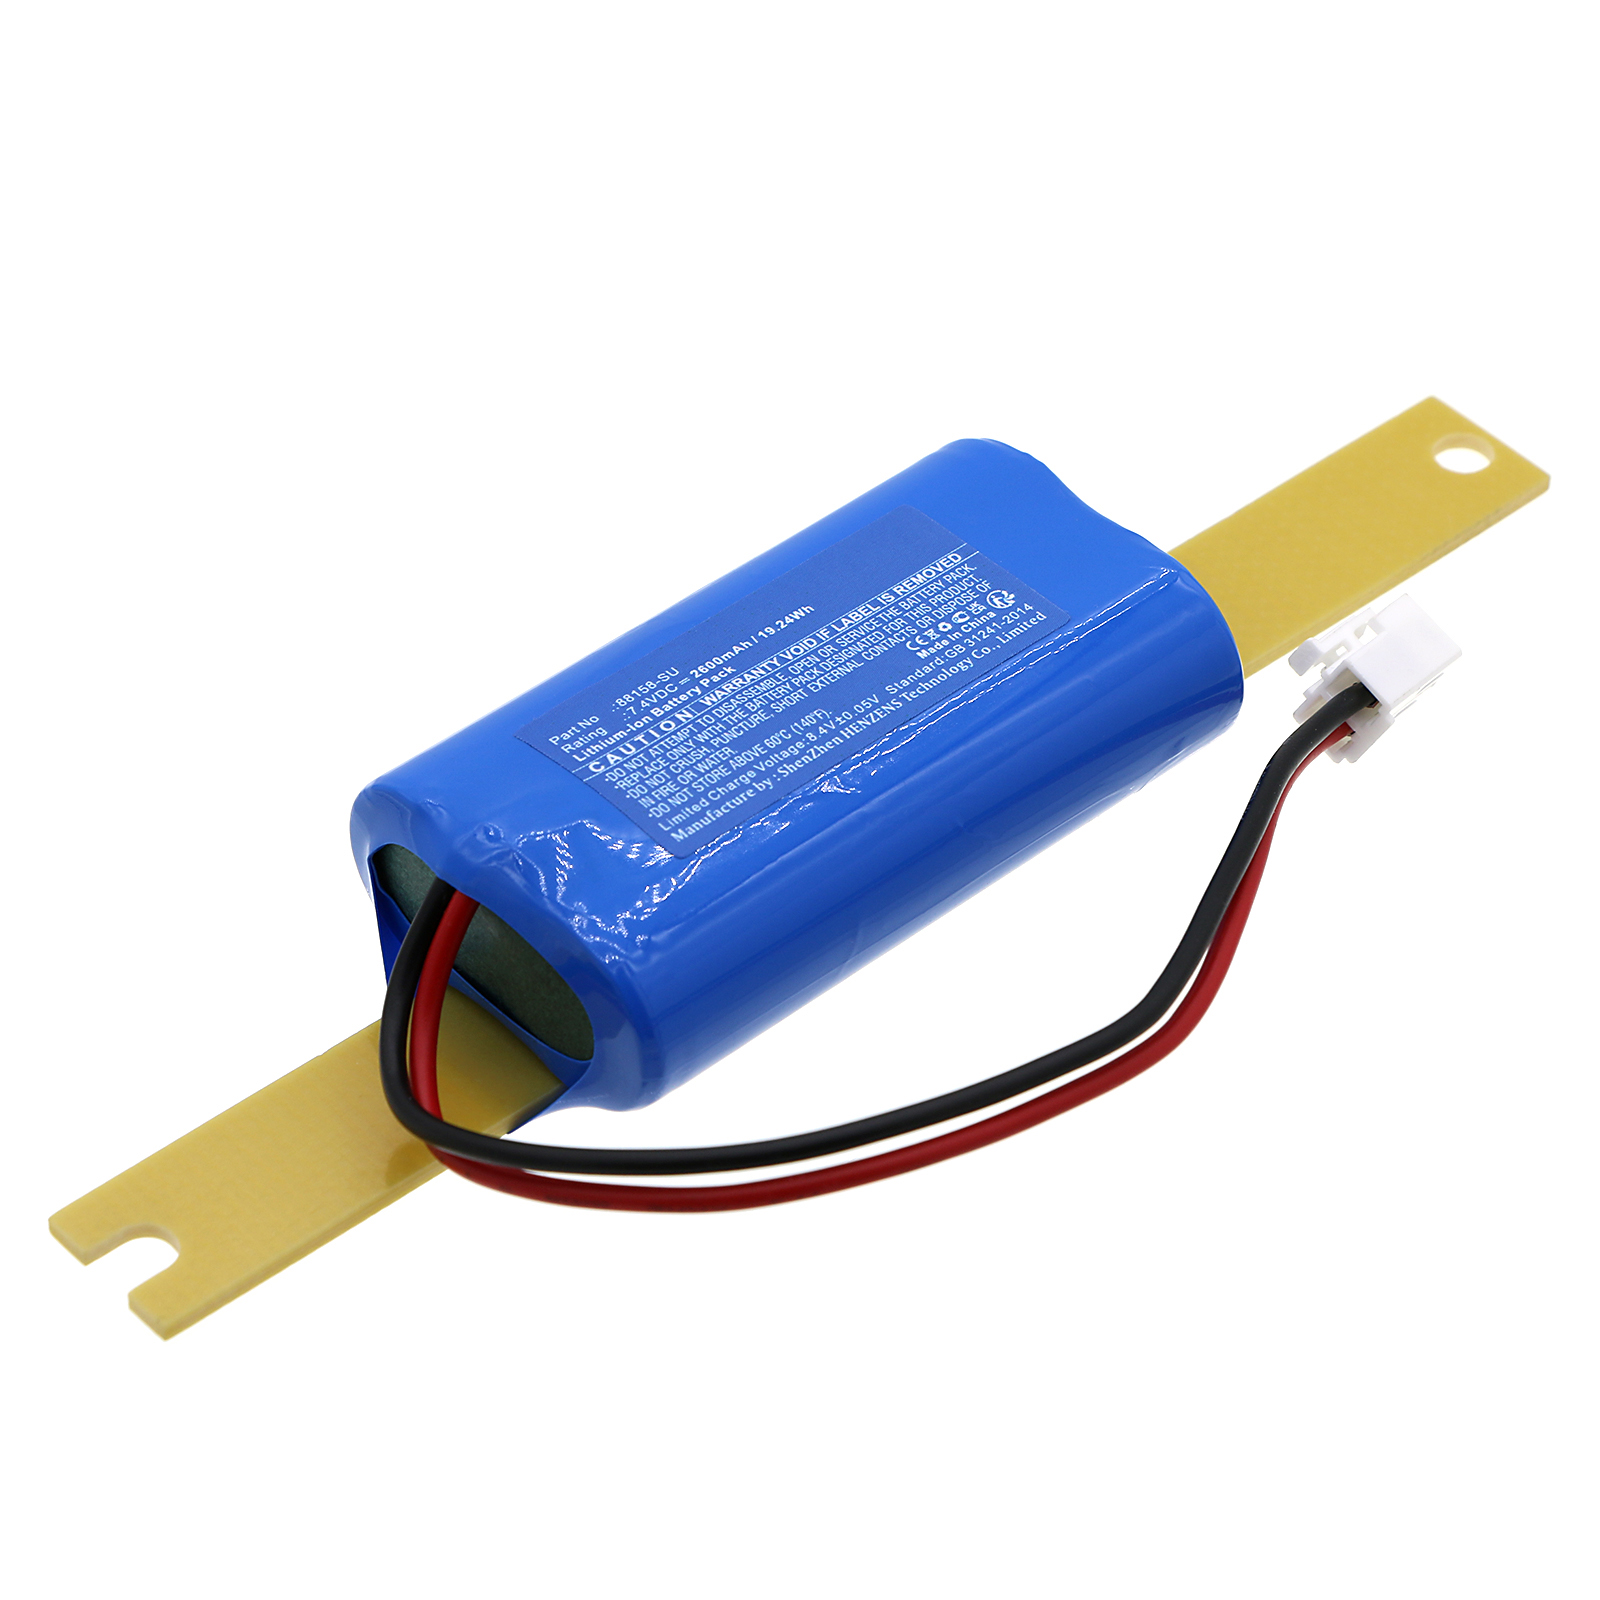 Synergy Digital Emergency Lighting Battery, Compatible with Sunlite 88158-SU Emergency Lighting Battery (Li-ion, 7.4V, 2600mAh)